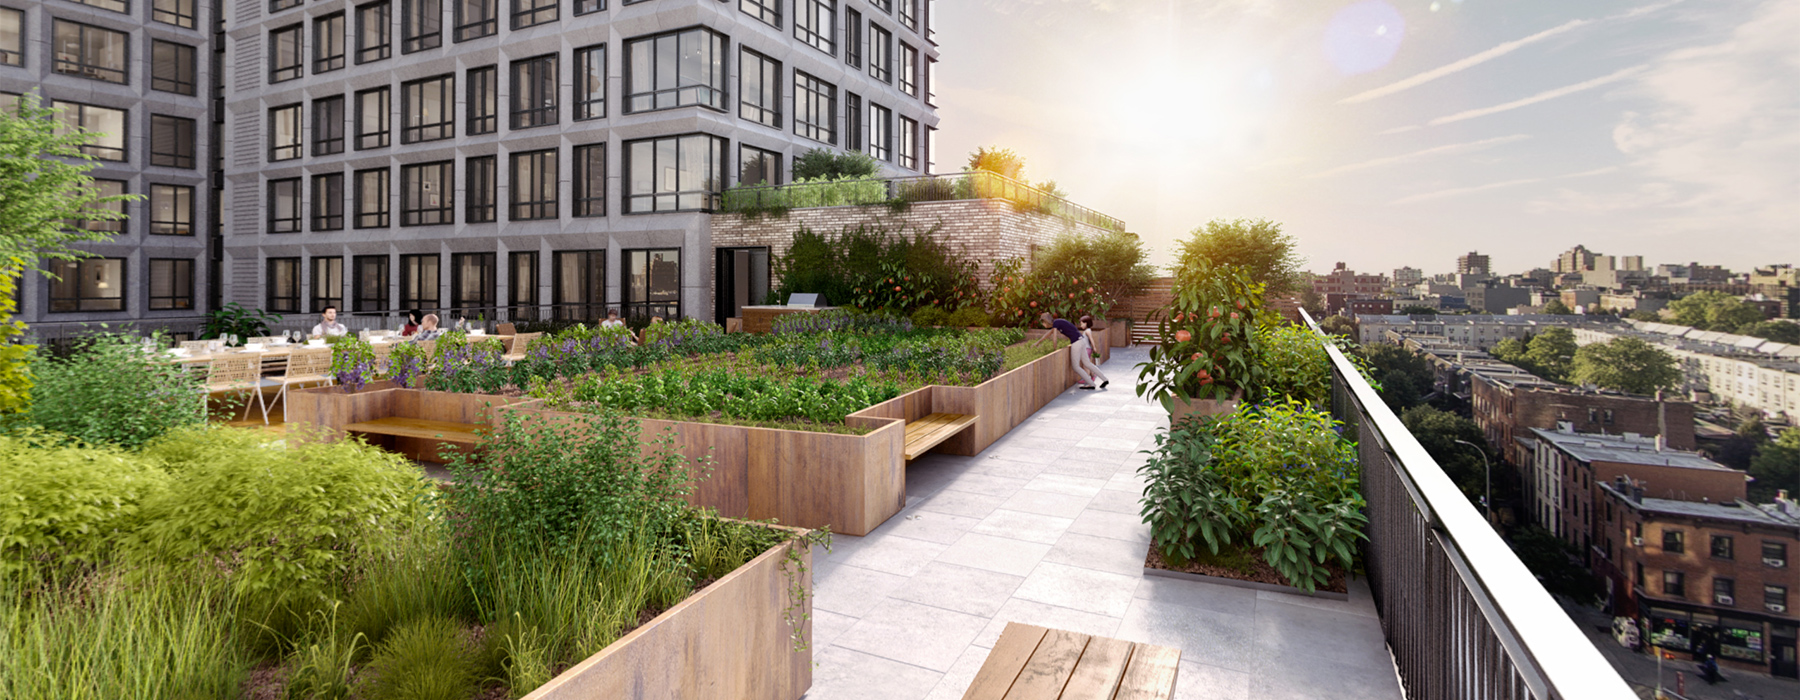 urban farming: new york's communal gardening movement